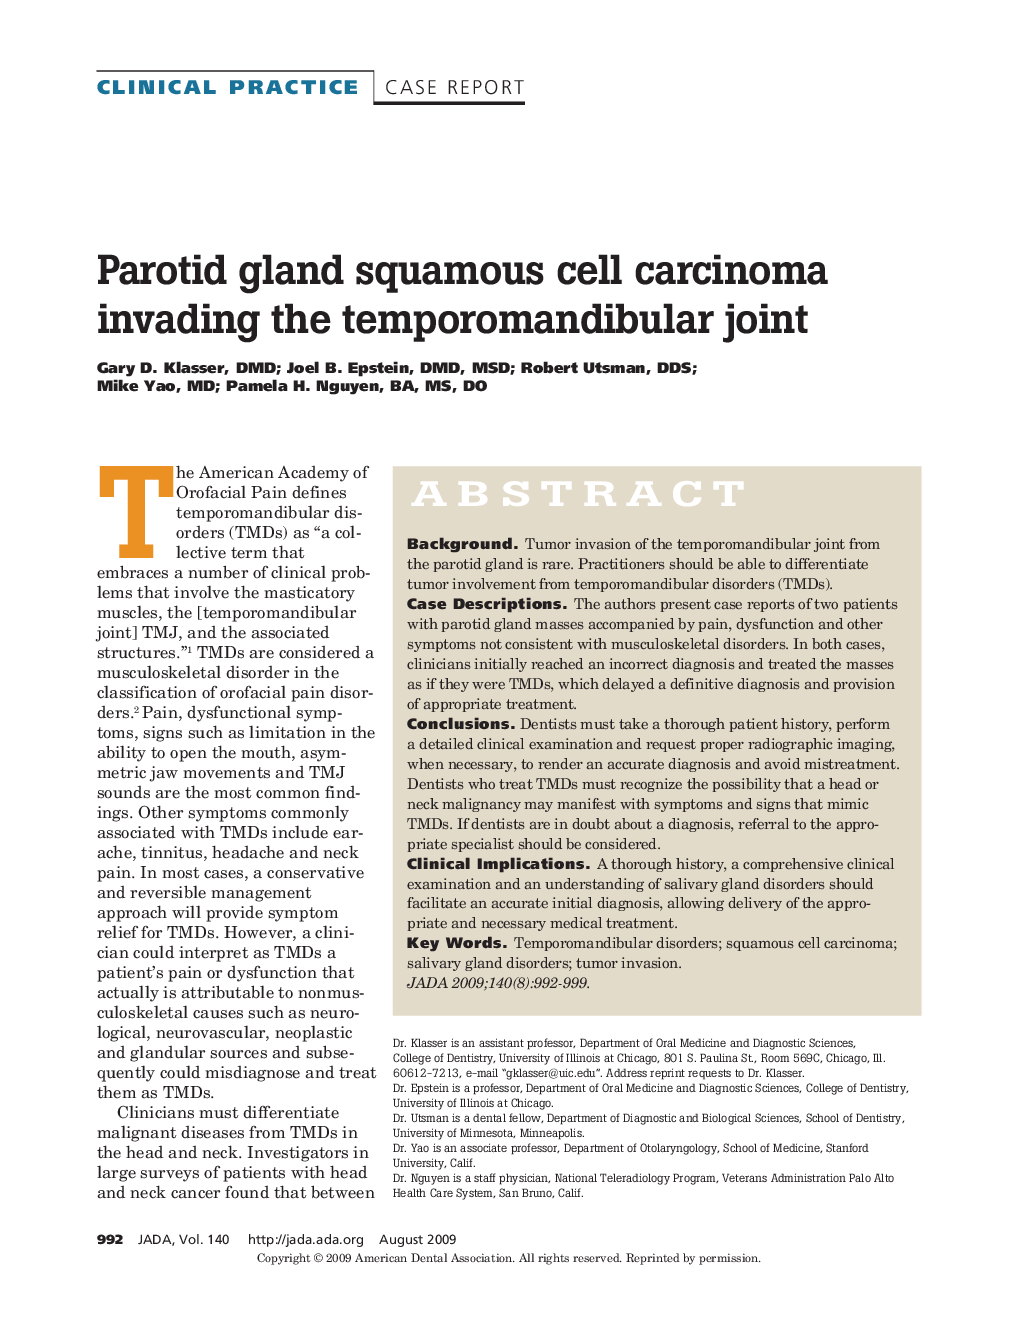 Parotid Gland Squamous Cell Carcinoma Invading the Temporomandibular Joint